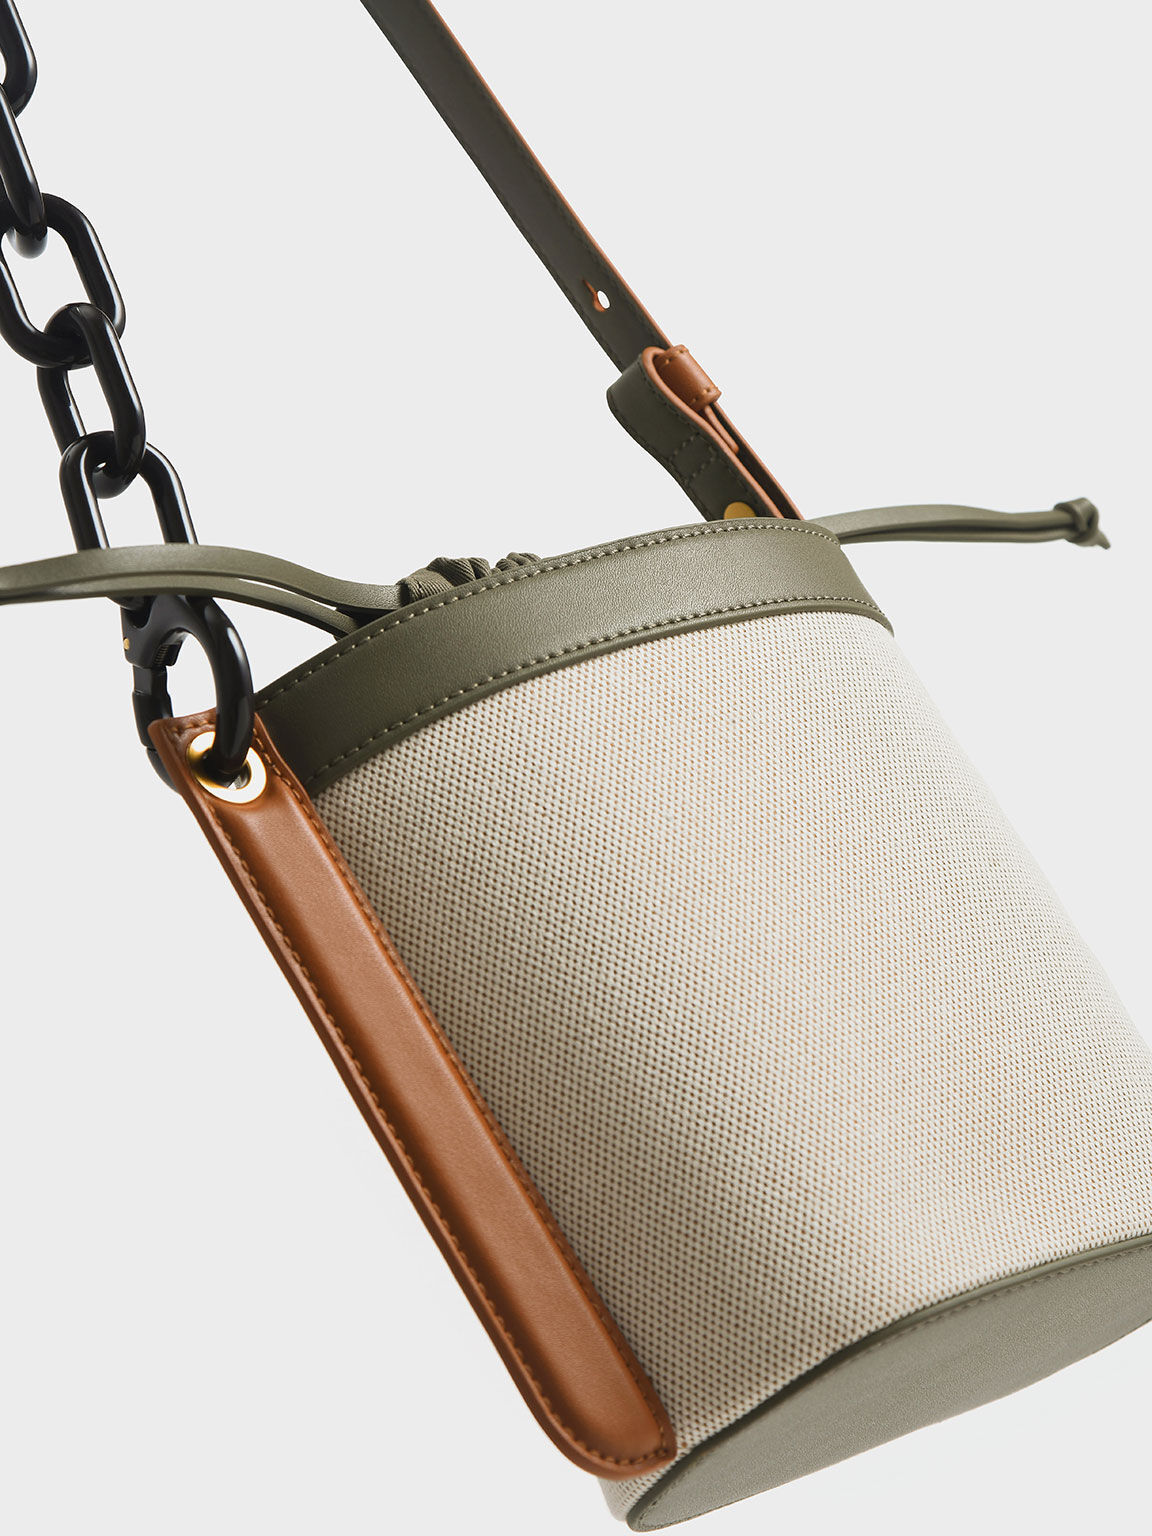 Chain Bags & Half-Moon Bags  Bag Trends 2022 - CHARLES & KEITH  International